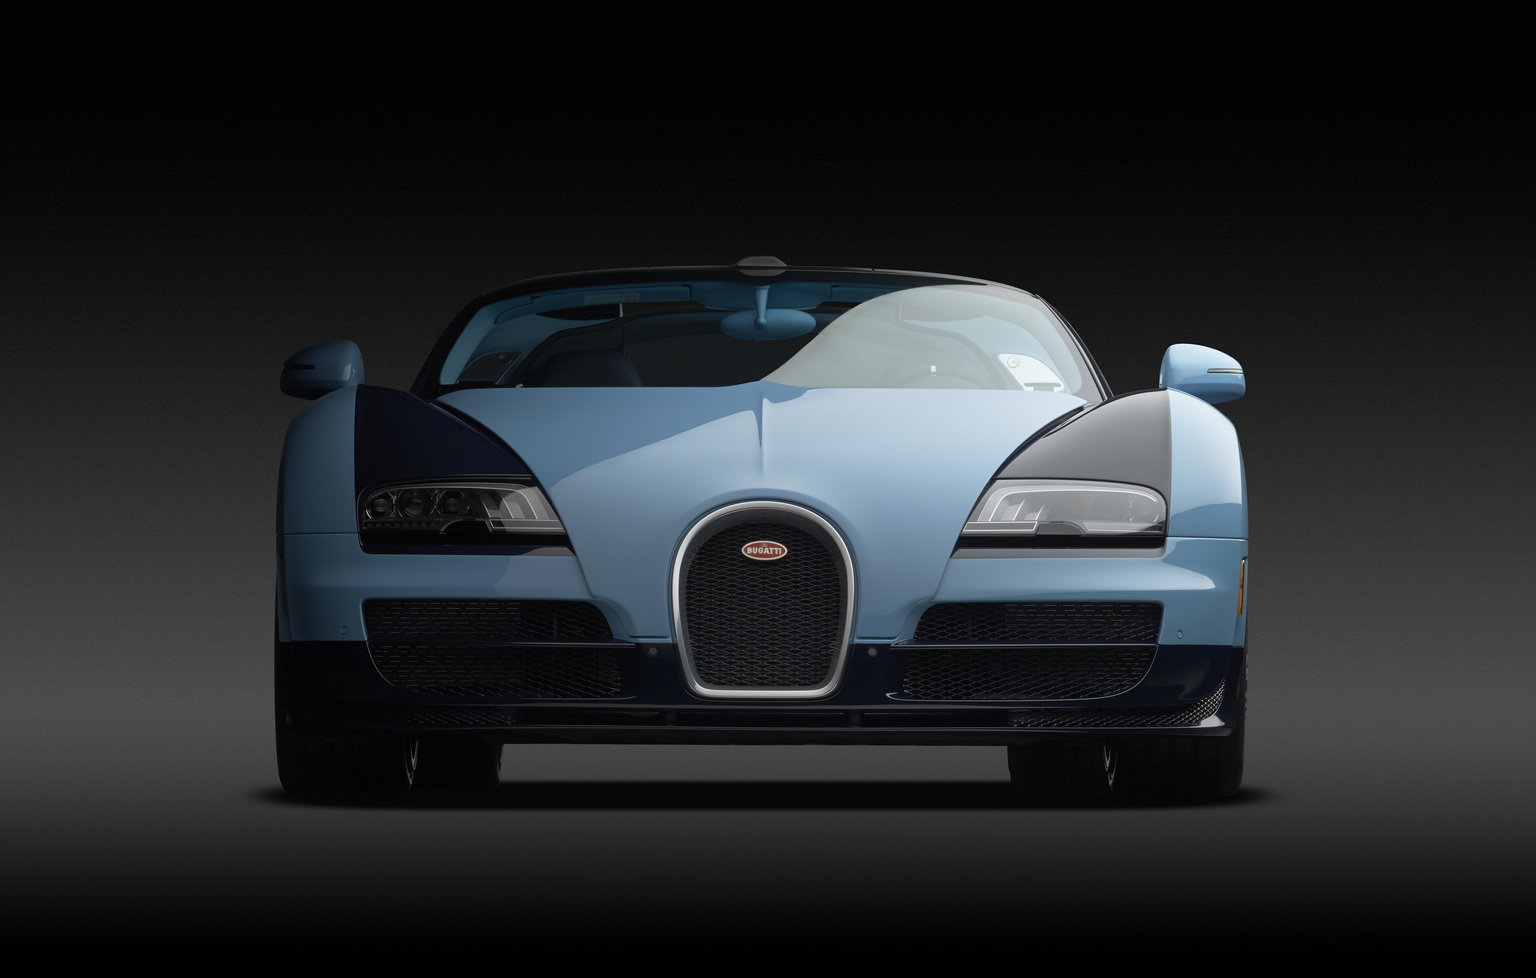 2013 Bugatti 16/4 Veyron Grand Sport Vitesse ‘Jean-Pierre Wimille’